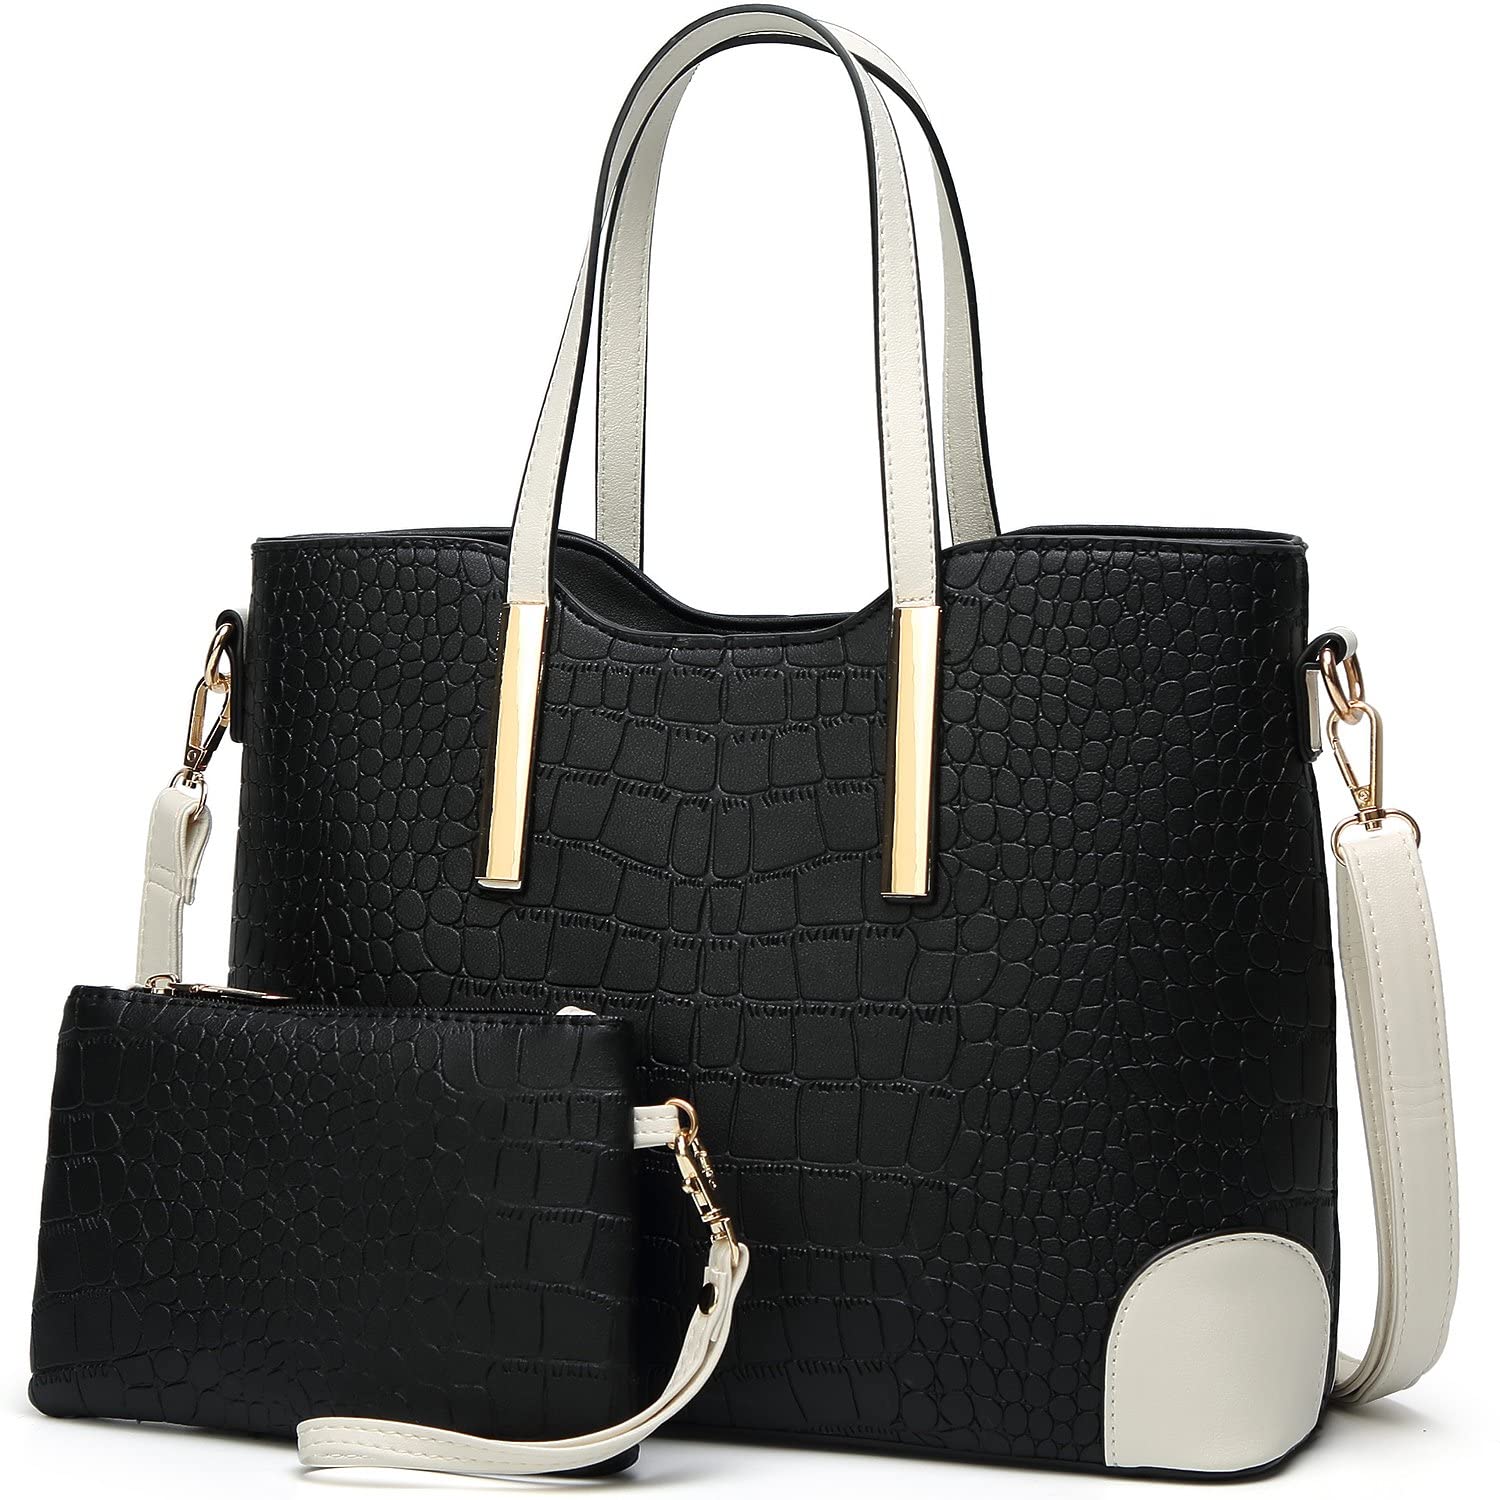 TcIFE Purses Satchel Handbags for Women Shoulder Tote Bags Wallets 